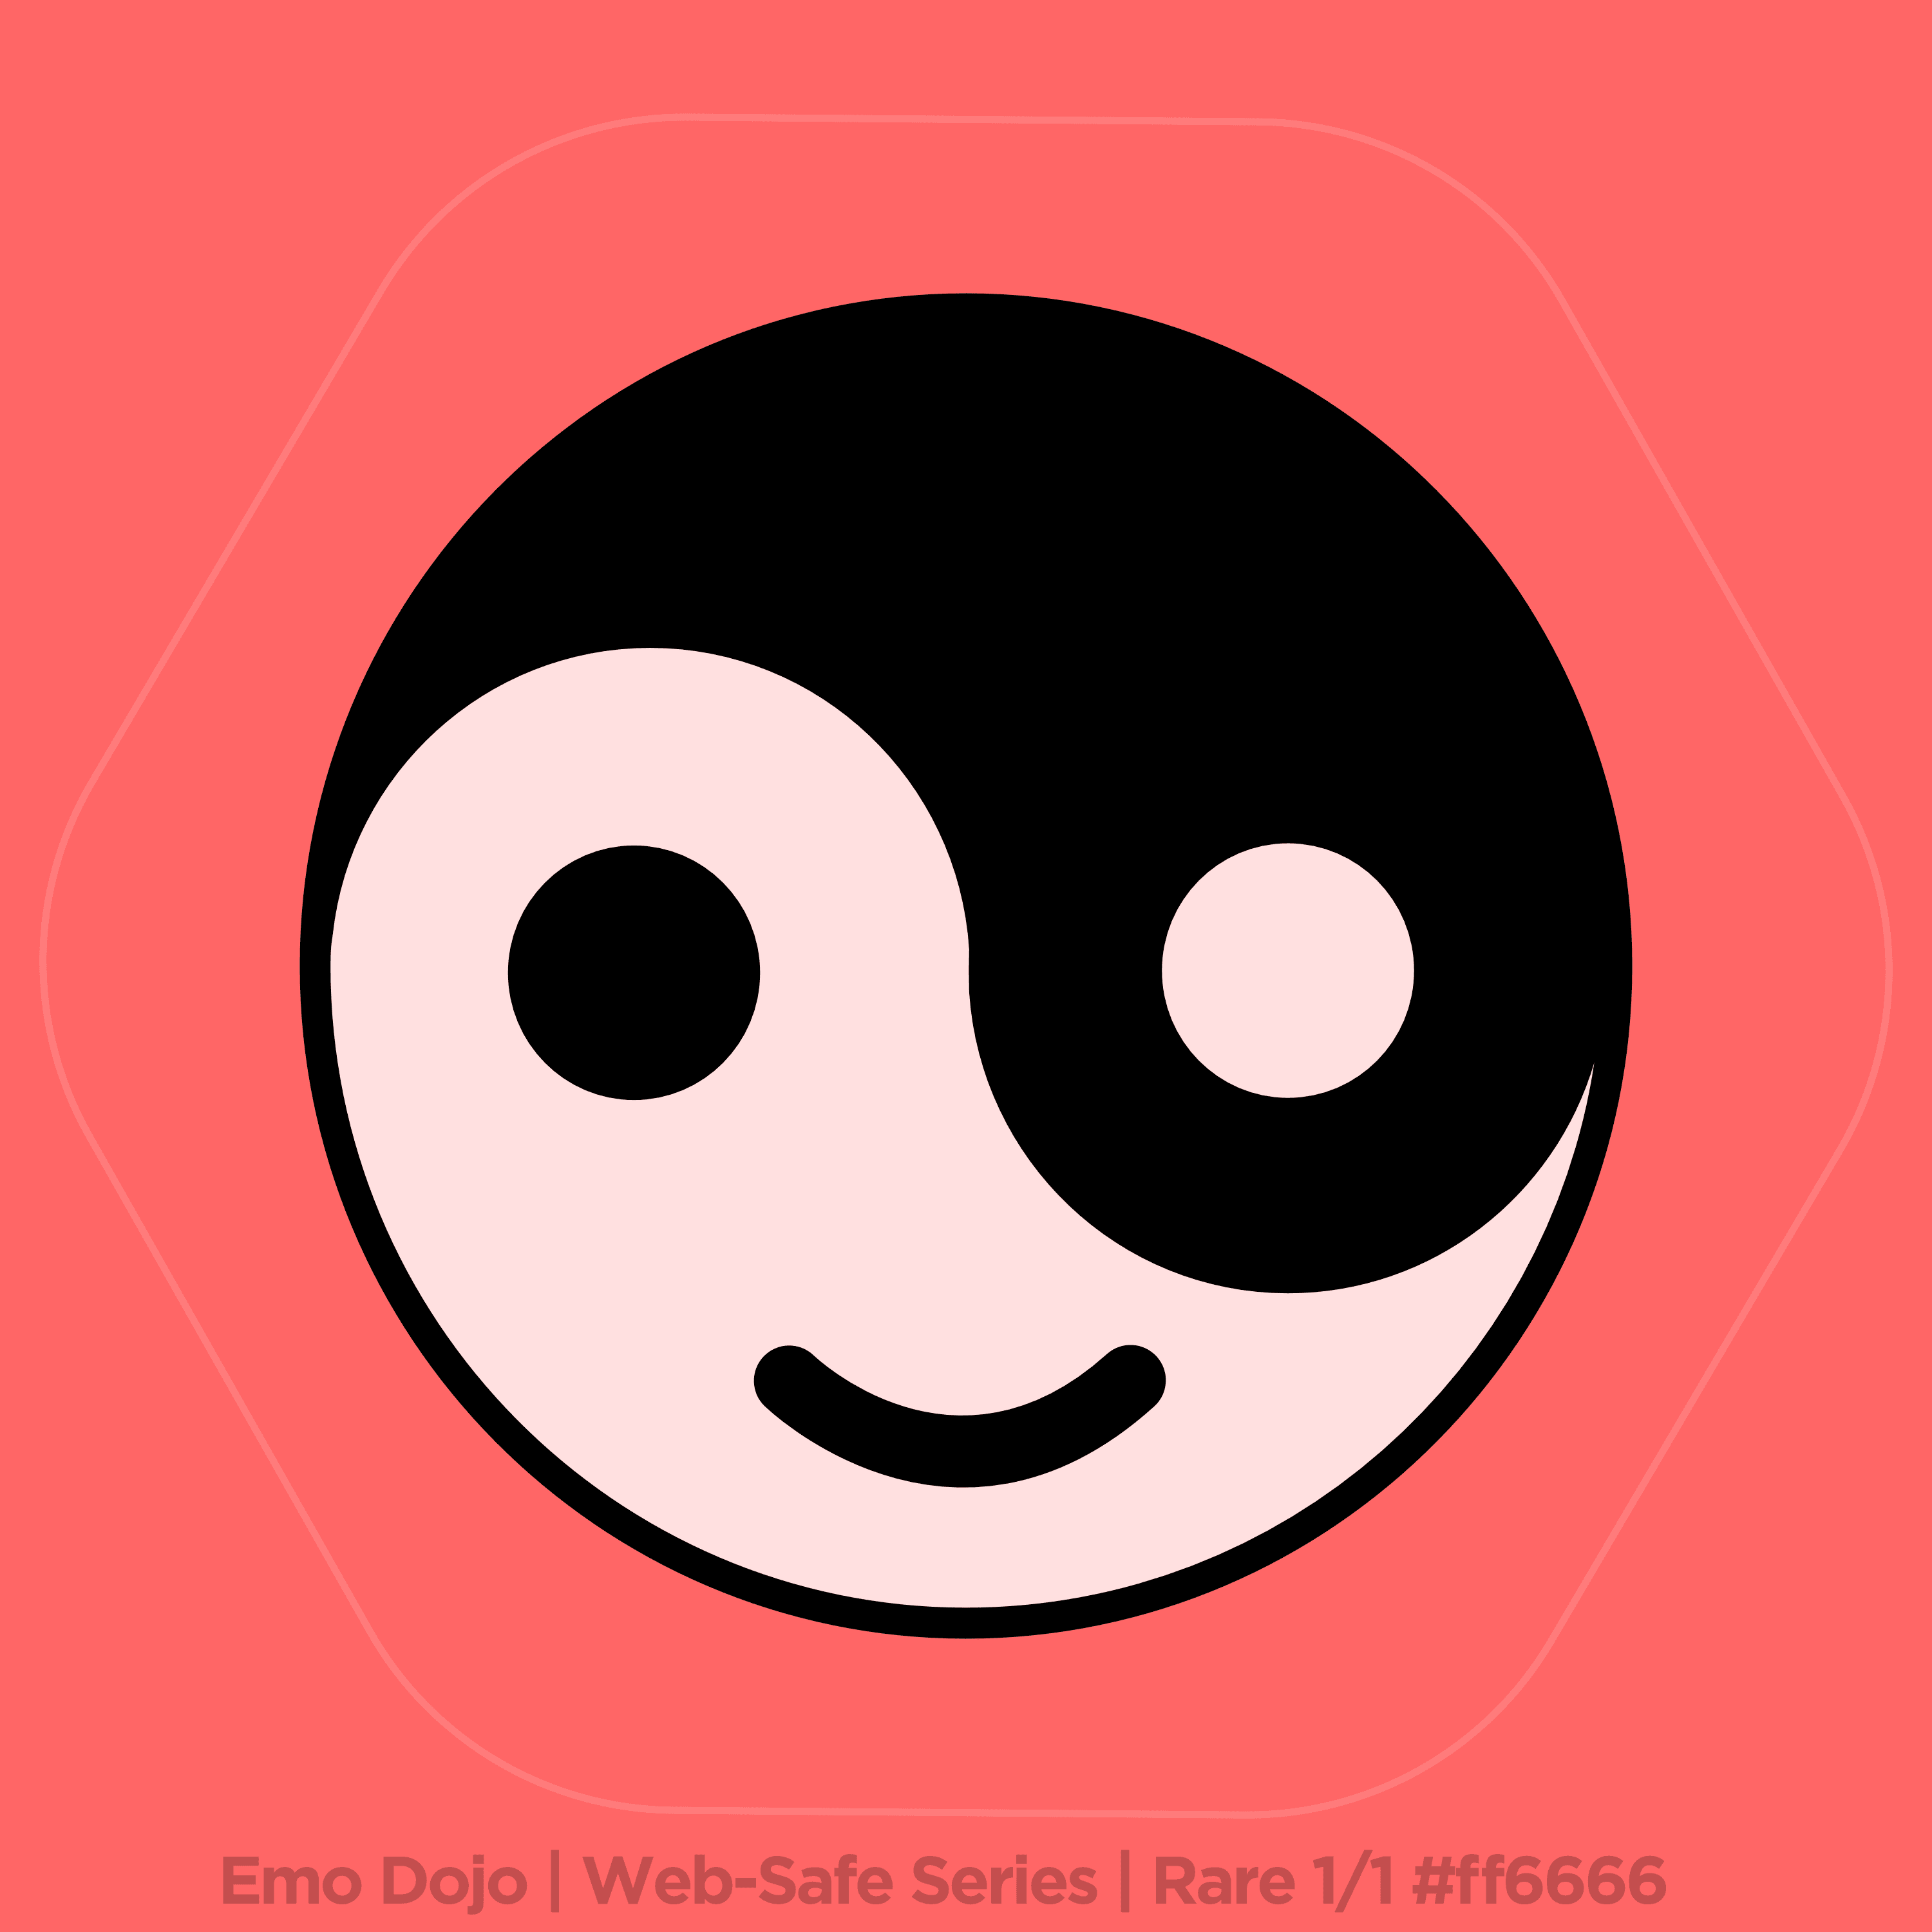 Emo Dojo | Web-Safe Series | Rare 1/1 #ff6666